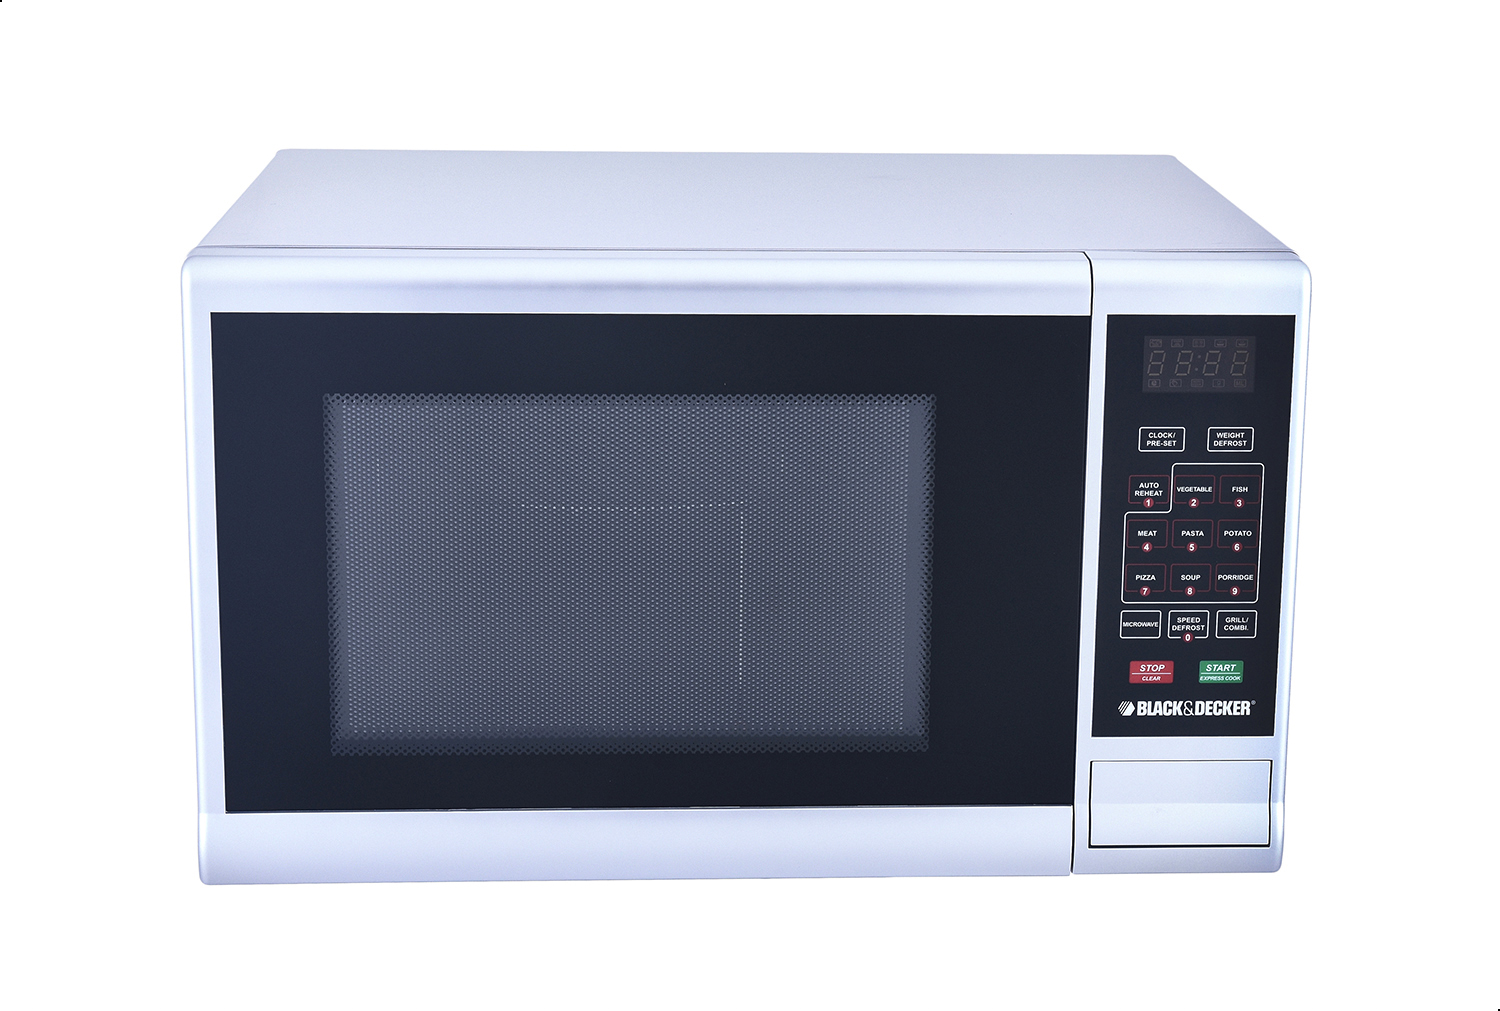 Black + Decker Microwave with Grill, 30 Liter, 900 Watt, Silver - MZ3000PG-B5